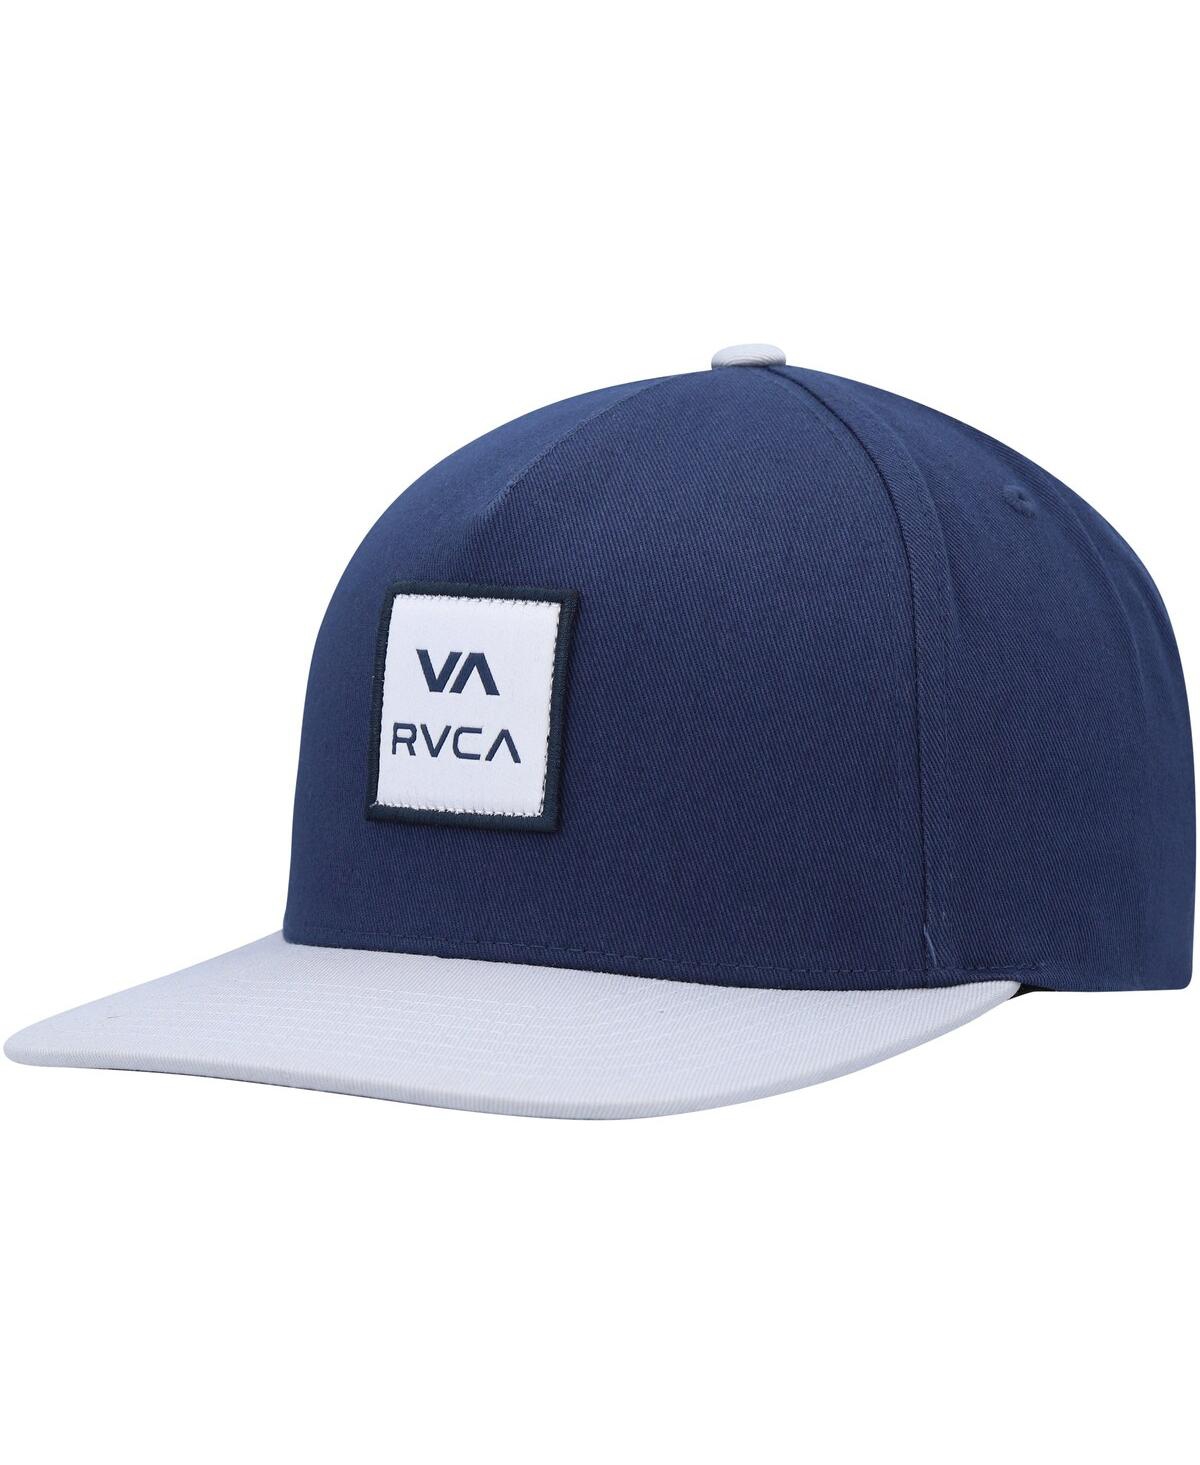 Rvca Men's  Navy Square Snapback Hat